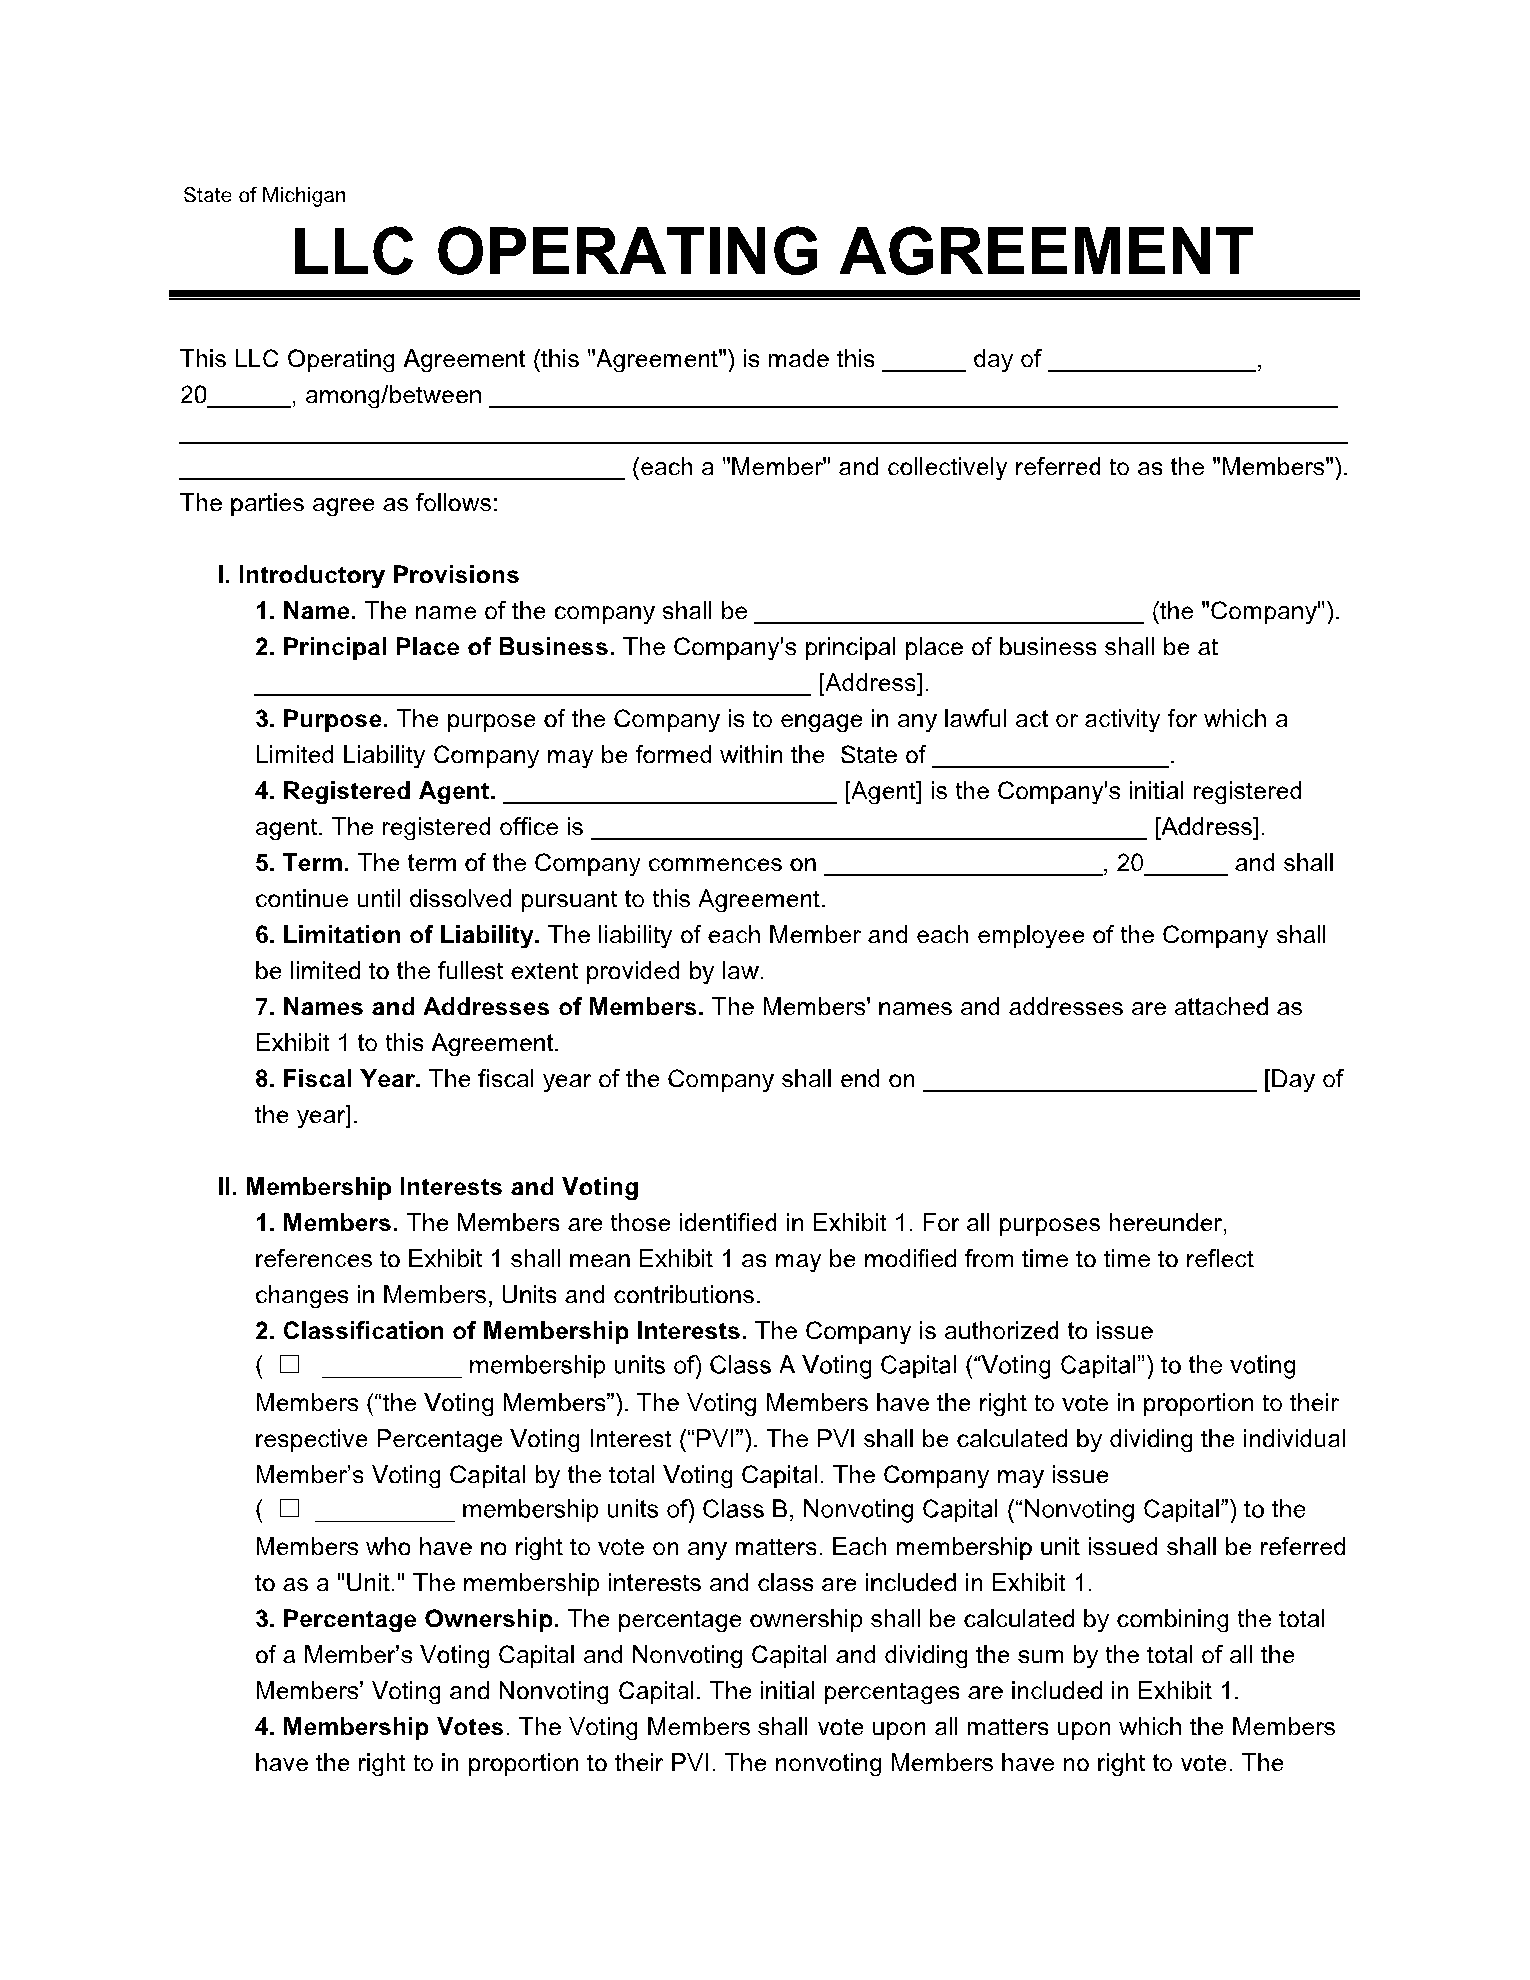 LLC Operating Agreement Michigan